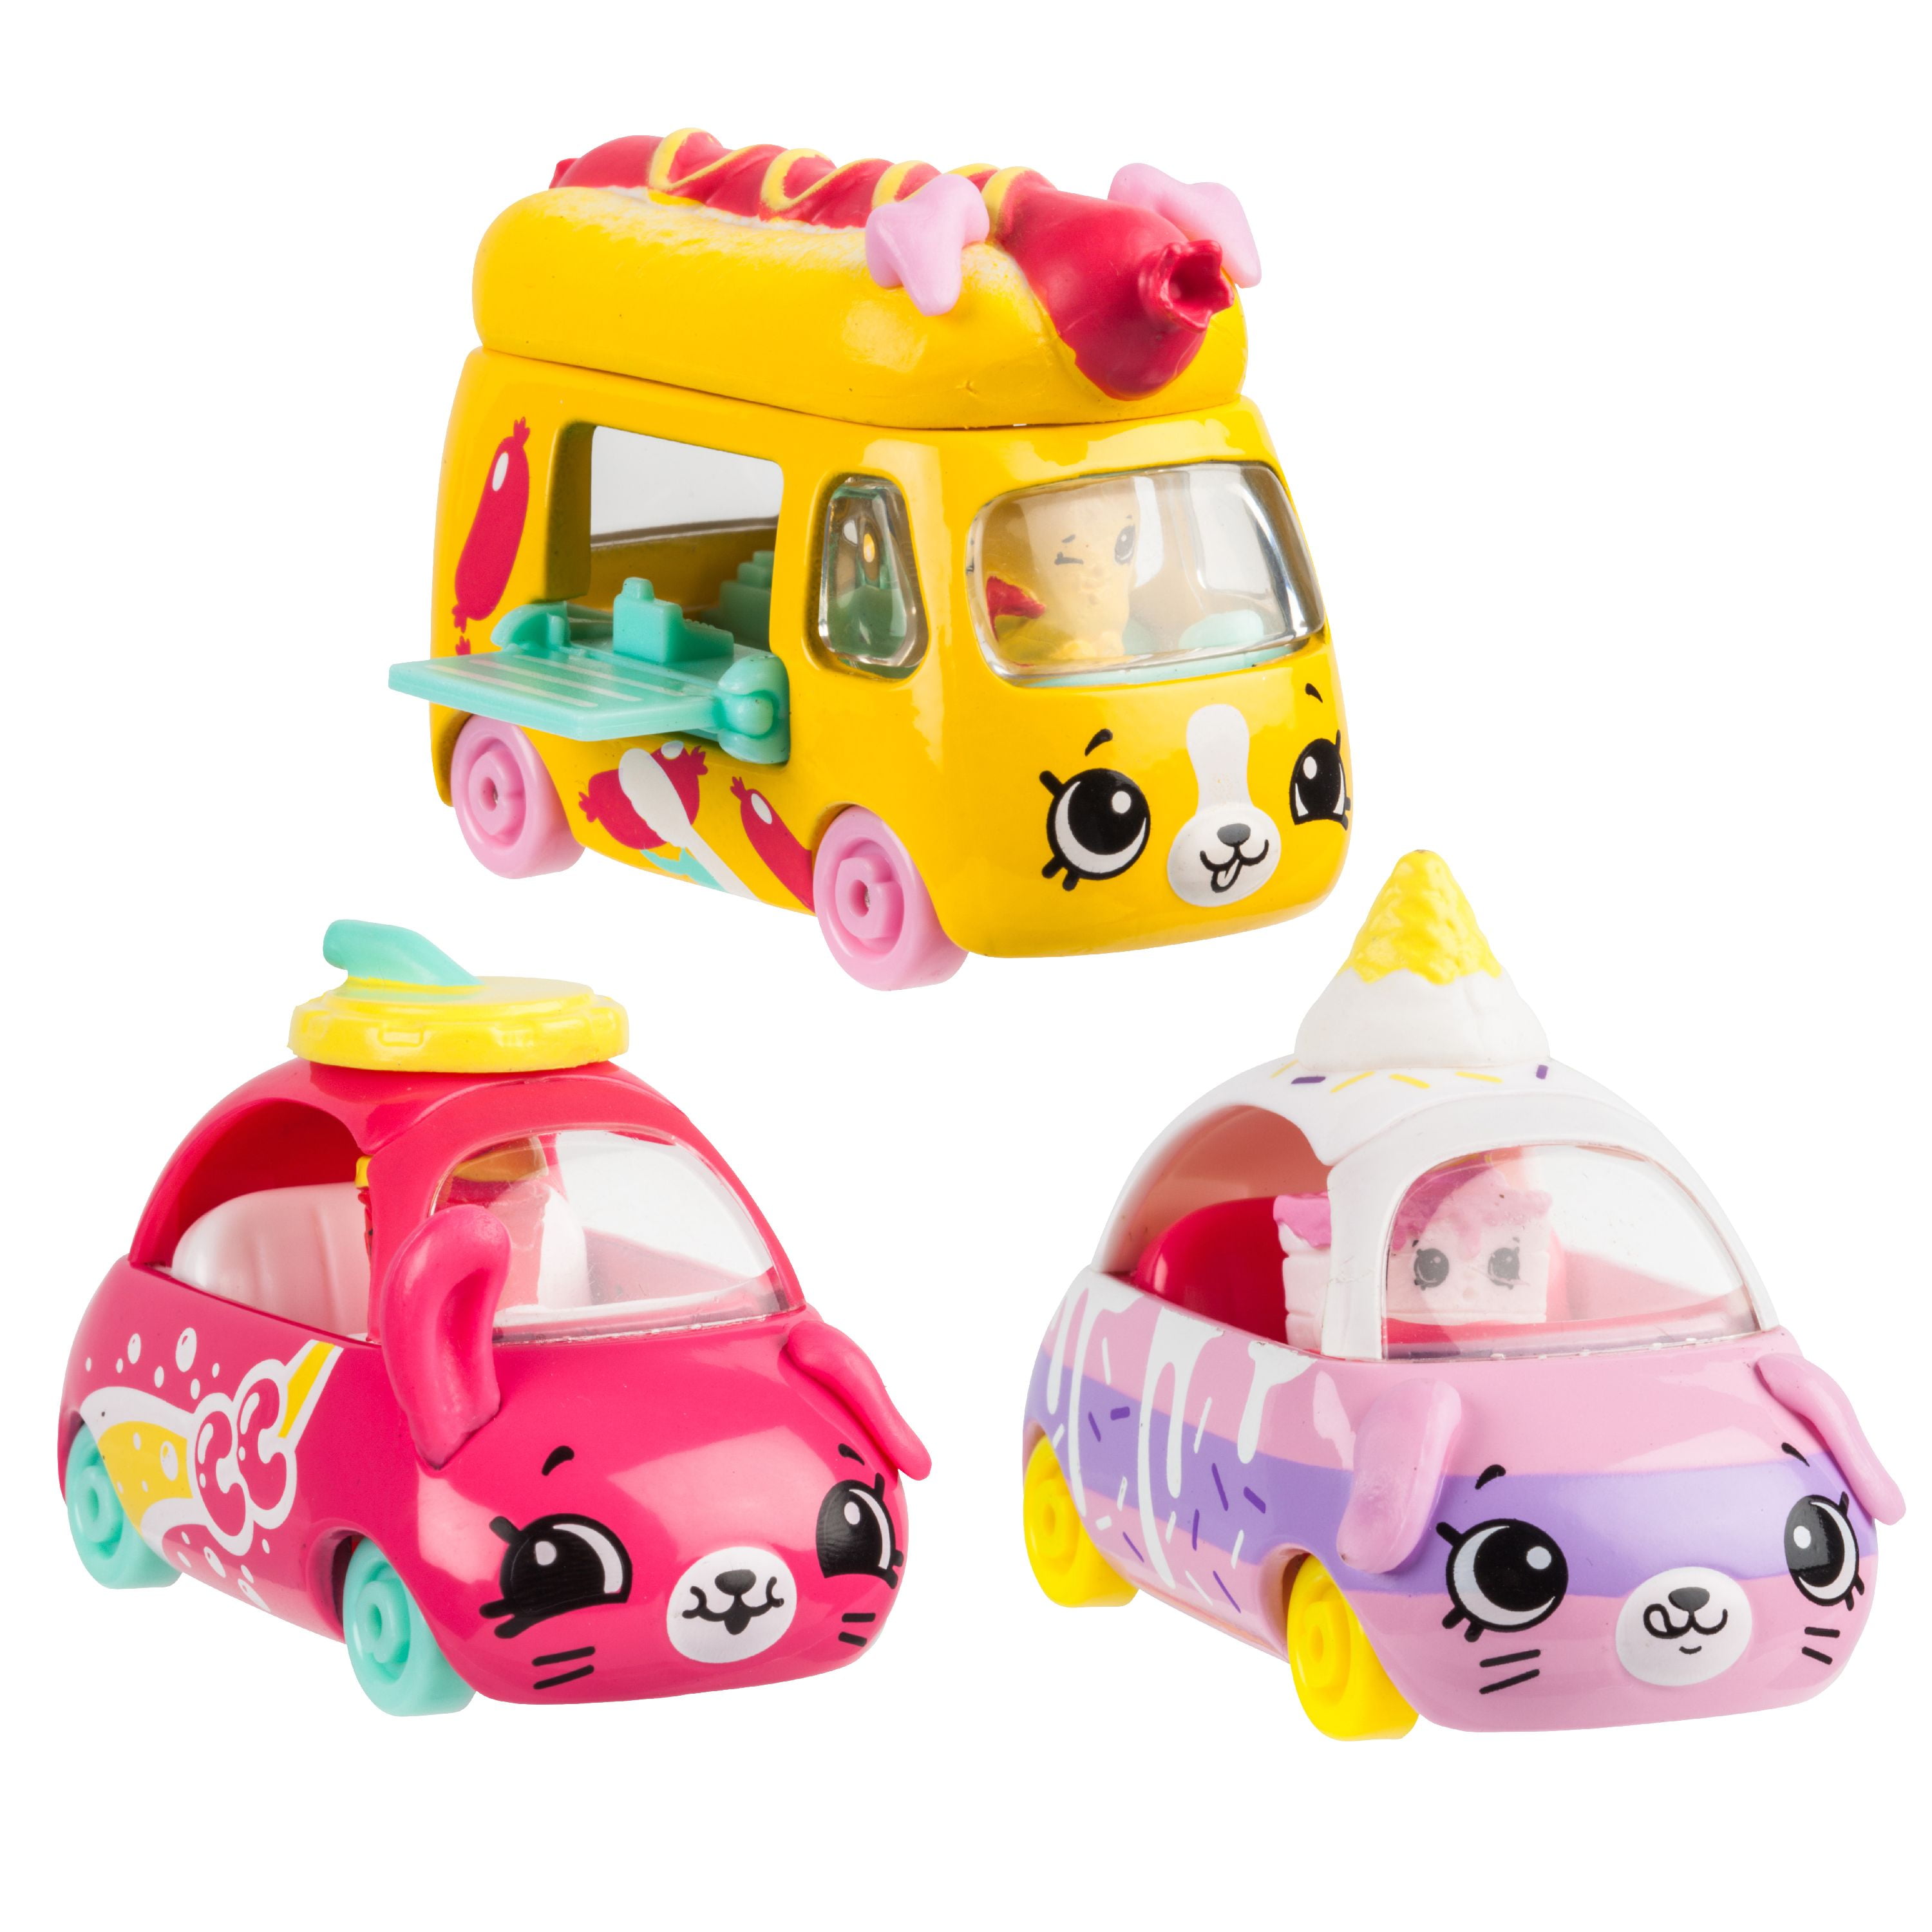 cutie cars shopkins walmart